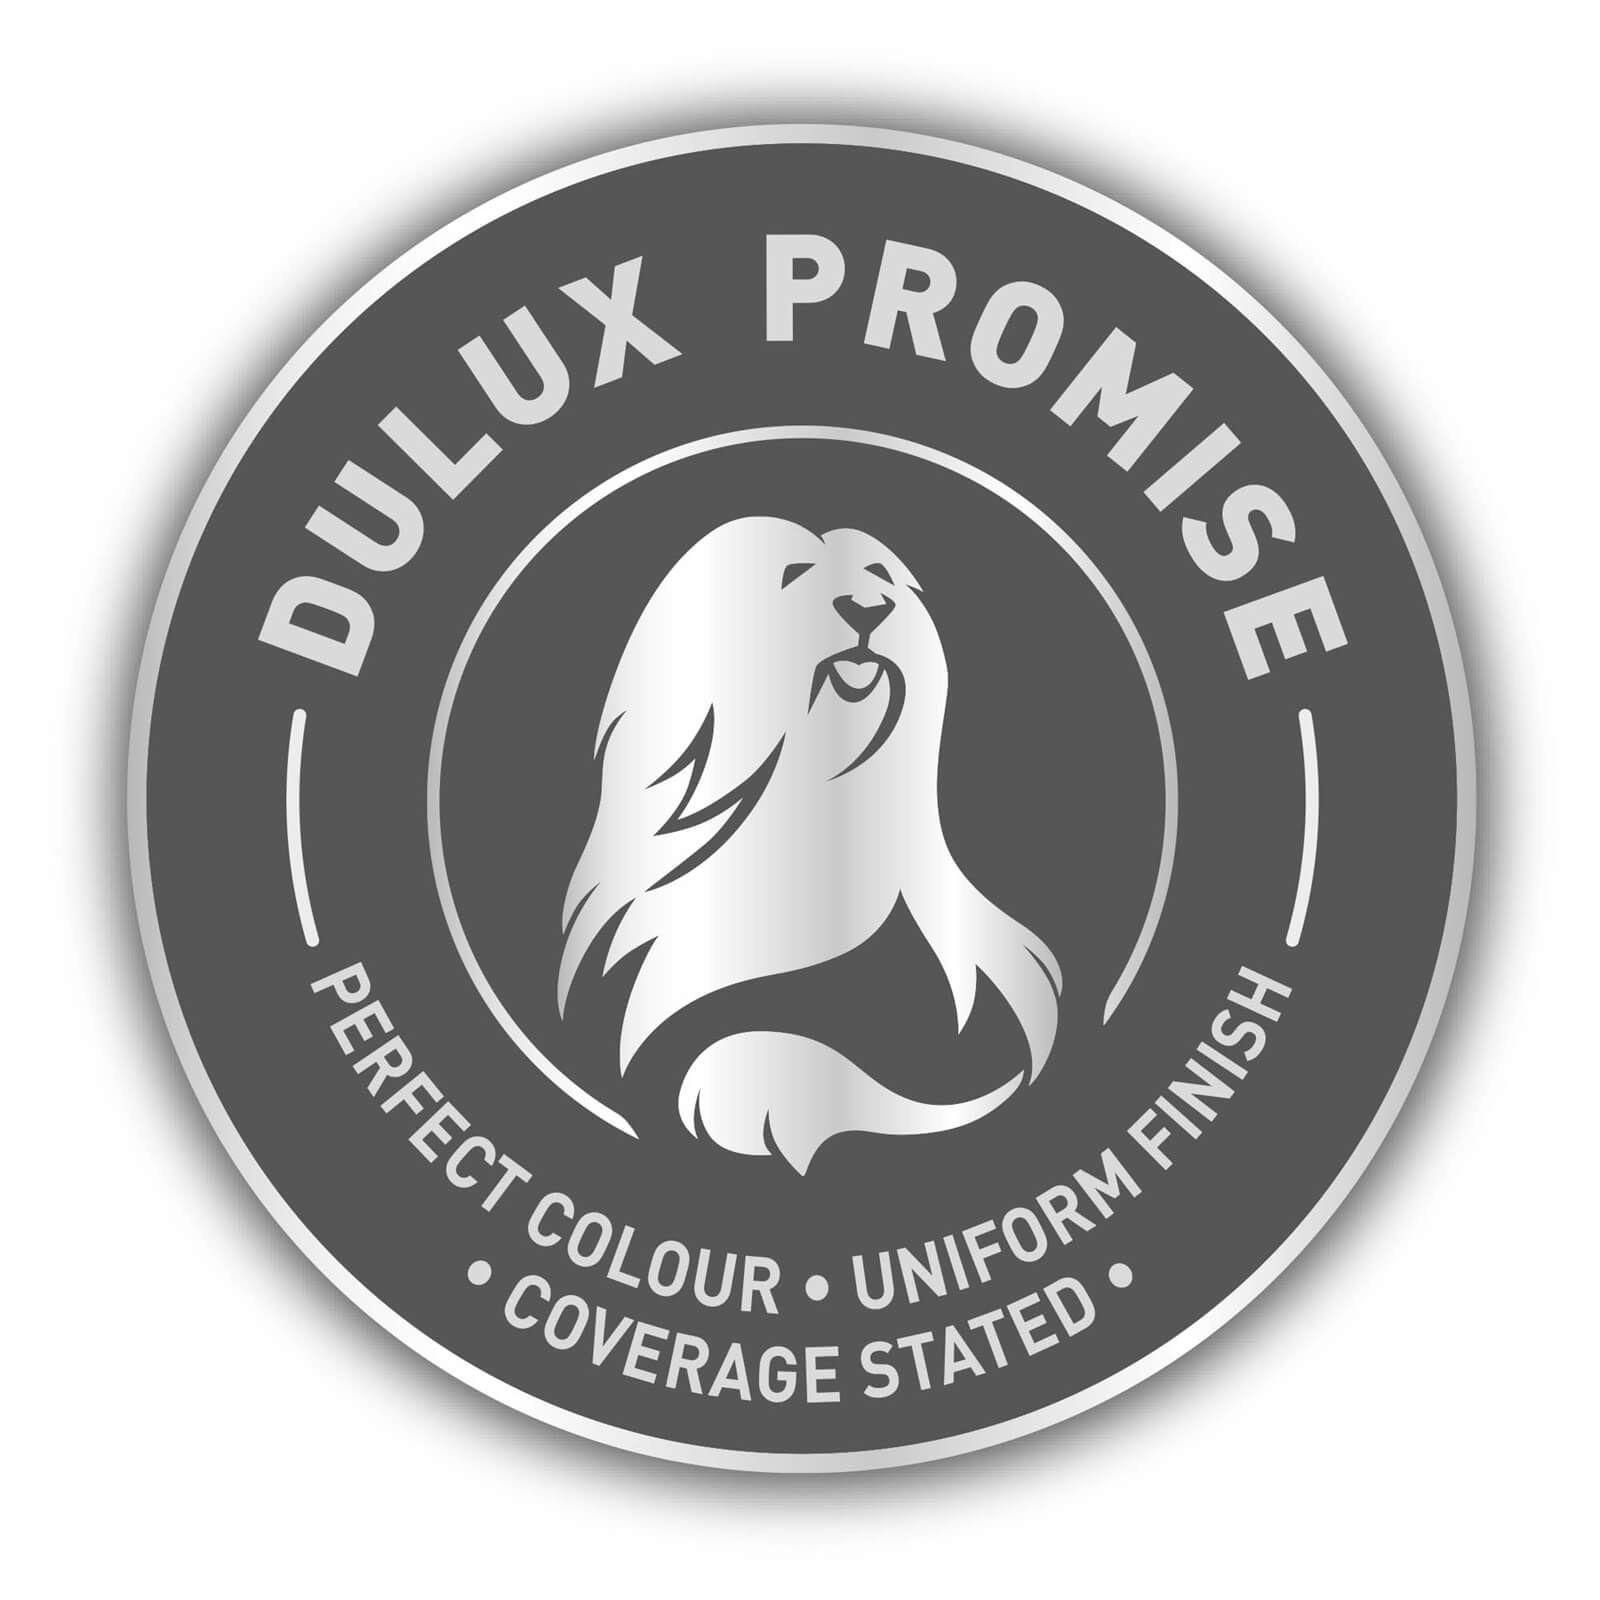 Dulux Silk Emulsion Paint First Dawn - 2.5L